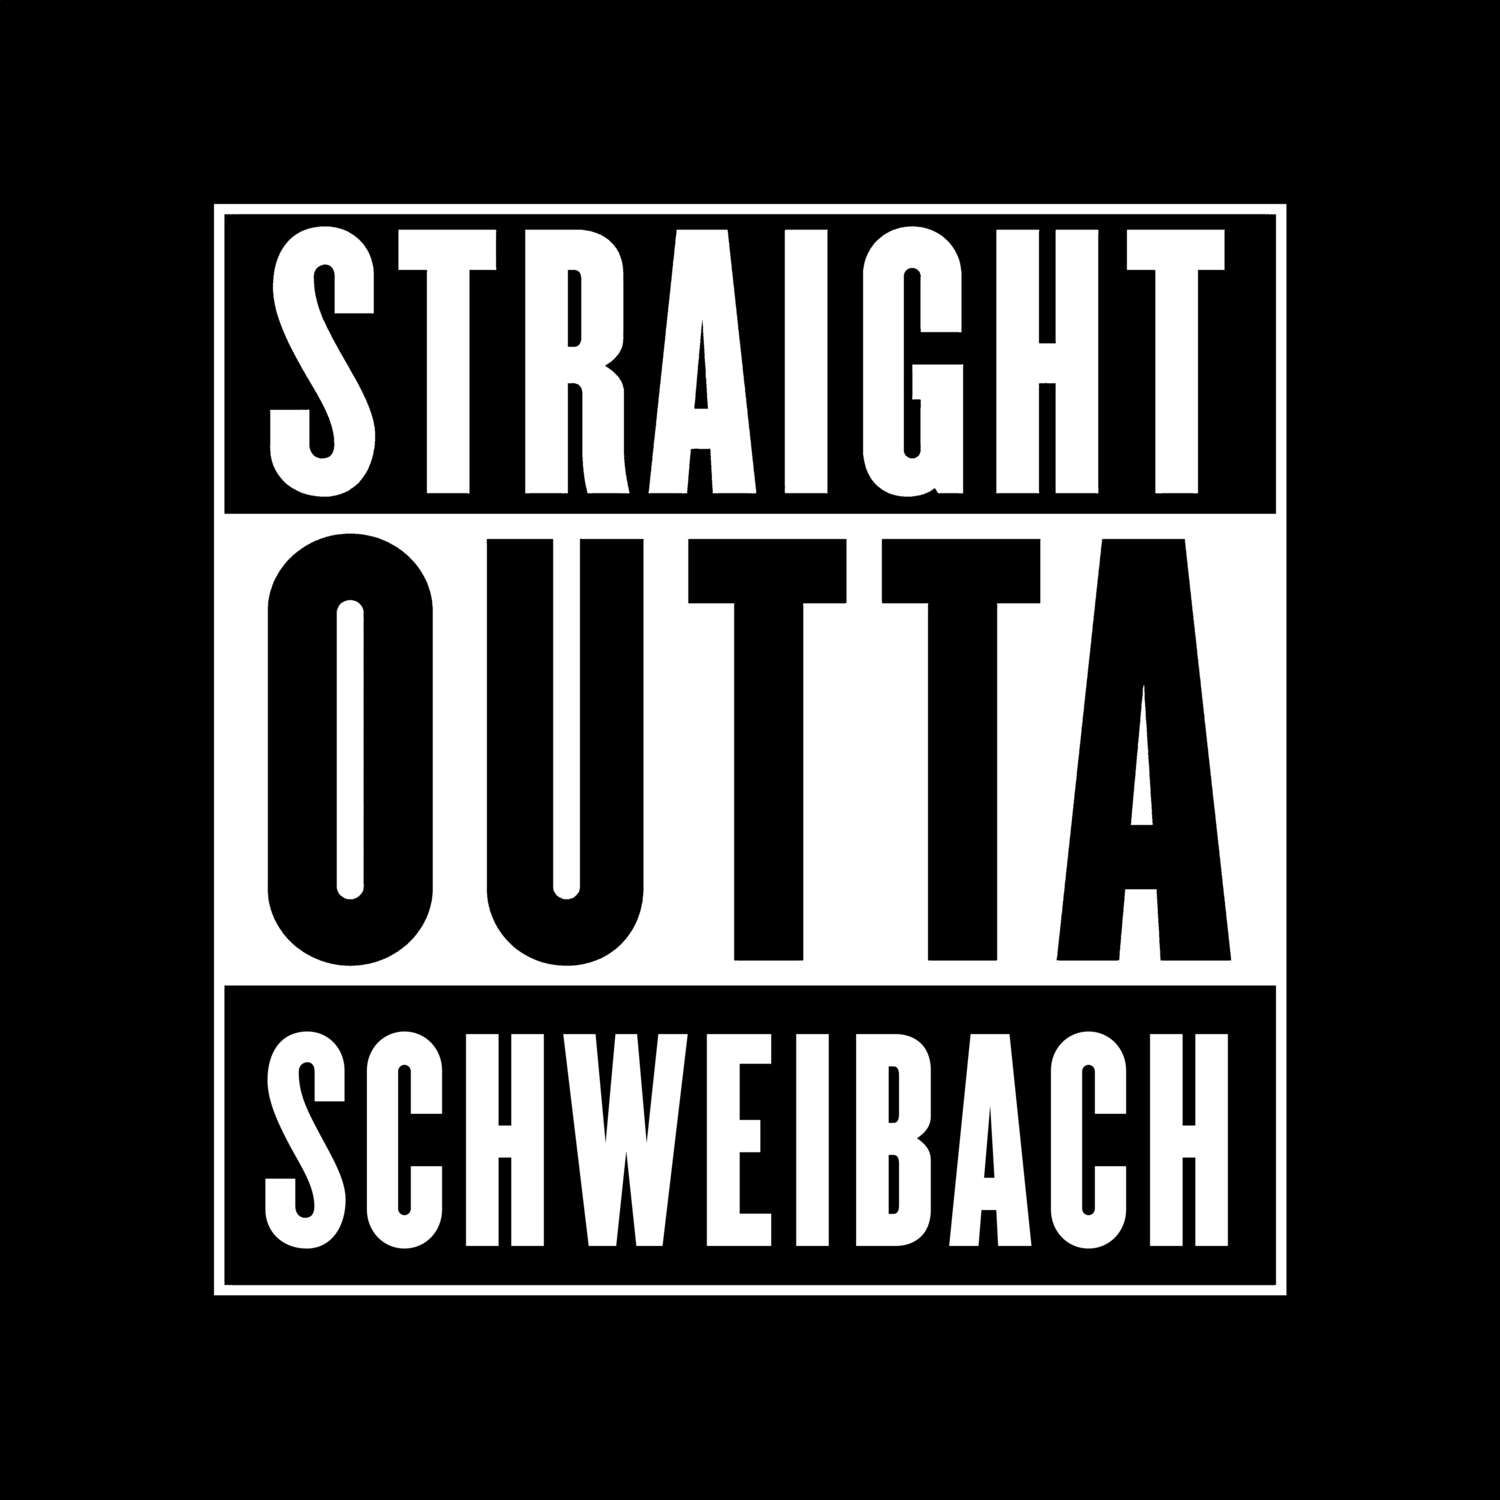 Schweibach T-Shirt »Straight Outta«